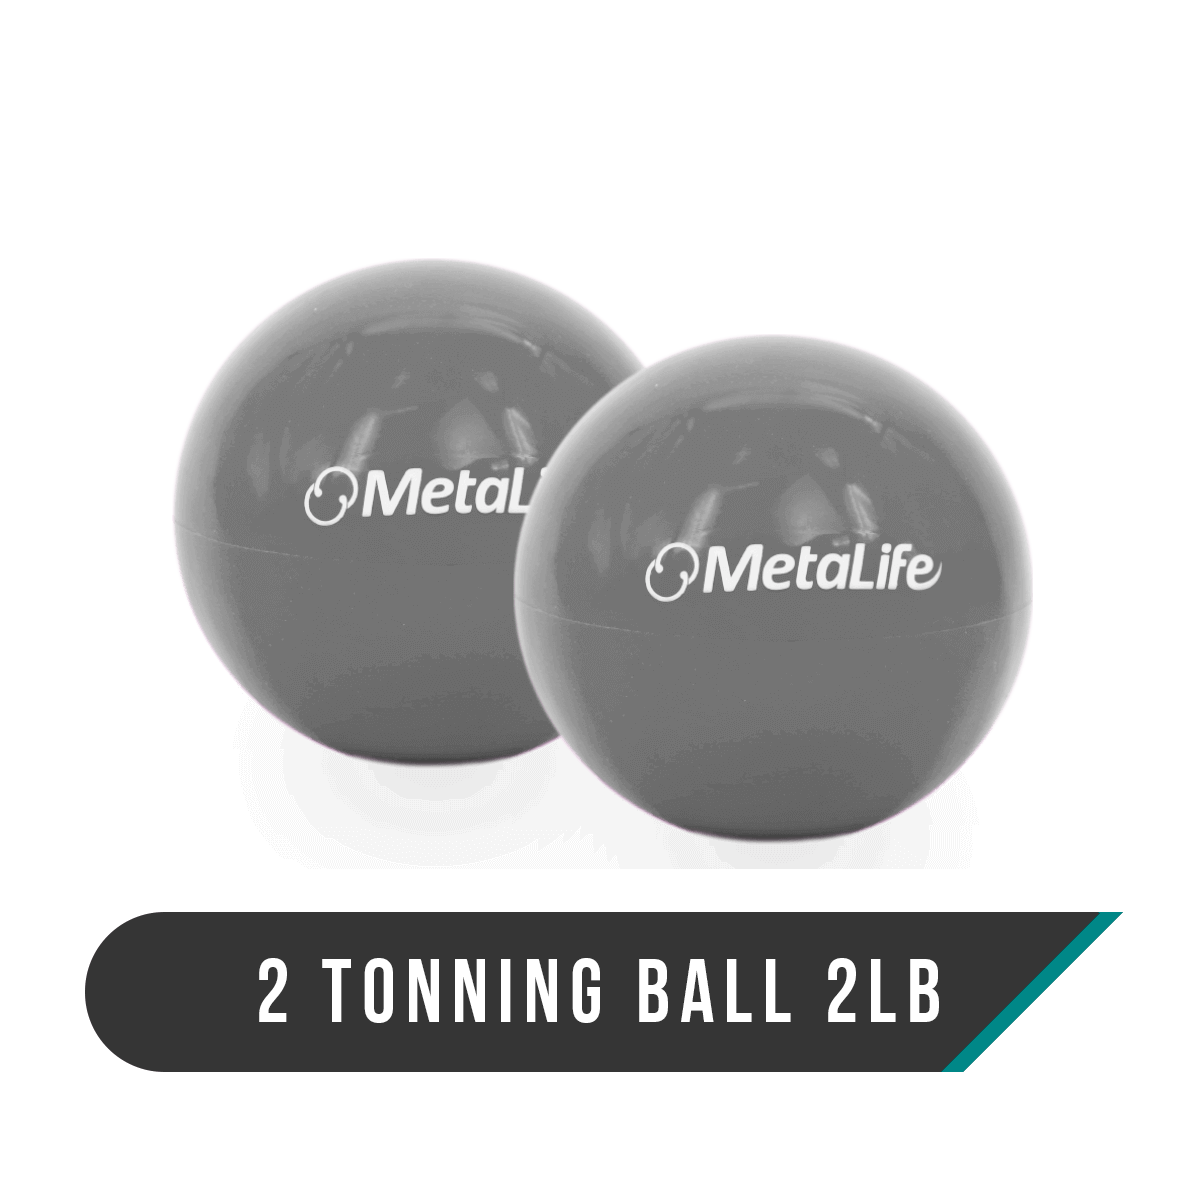 2 tonning ball 2lb